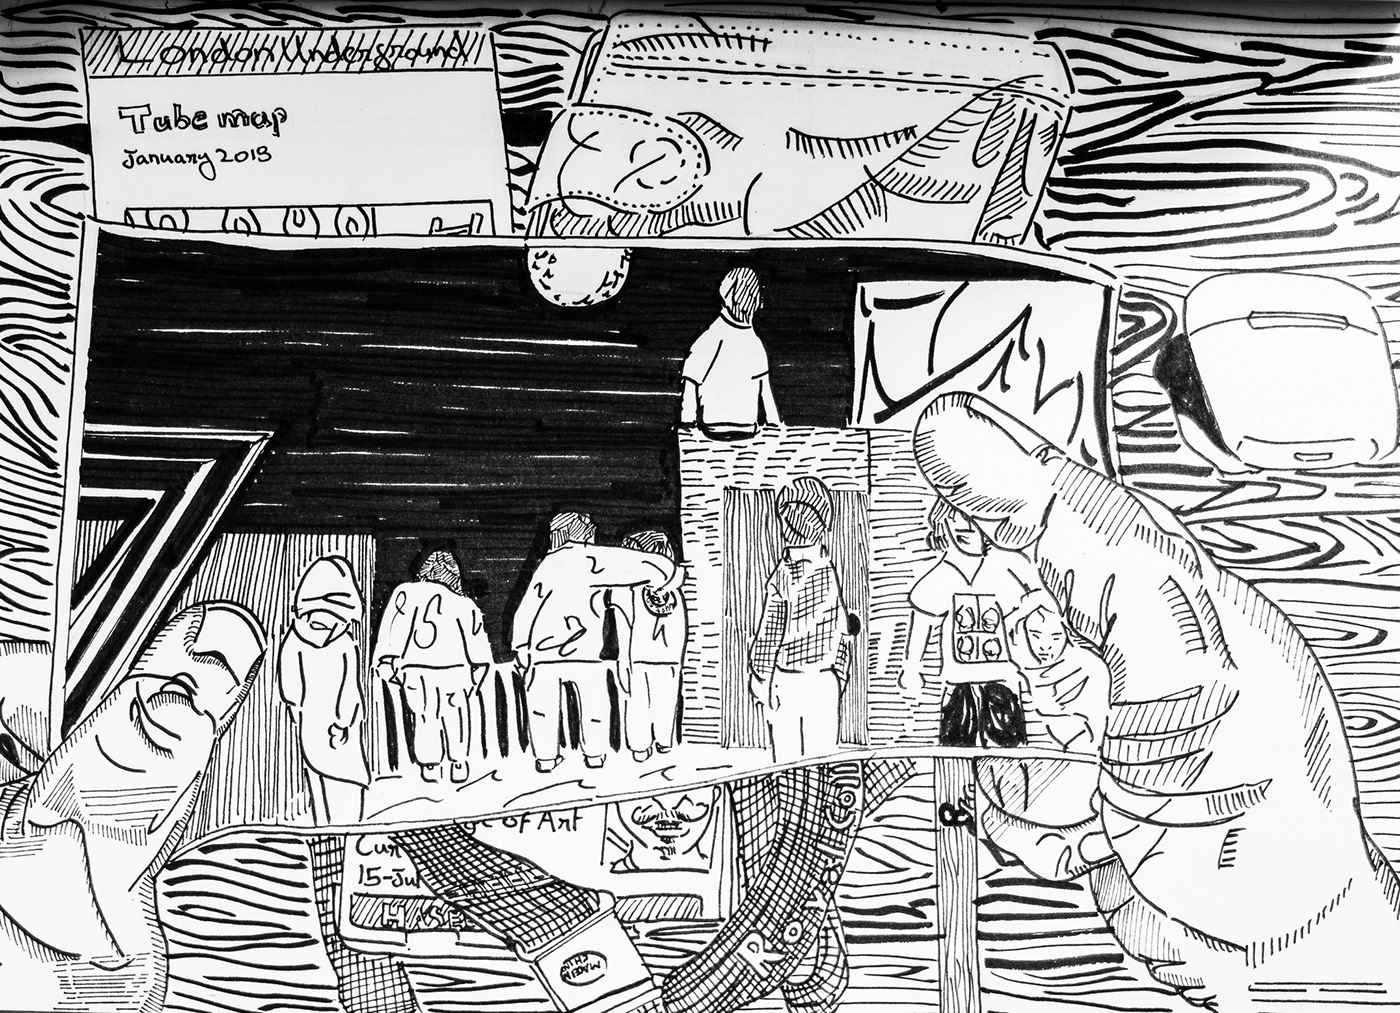 dark grimey ILLUSTRATION  lahoreart londonart nationalcollegeofart pakistaniart royalcollegeofart sketchbook sketching